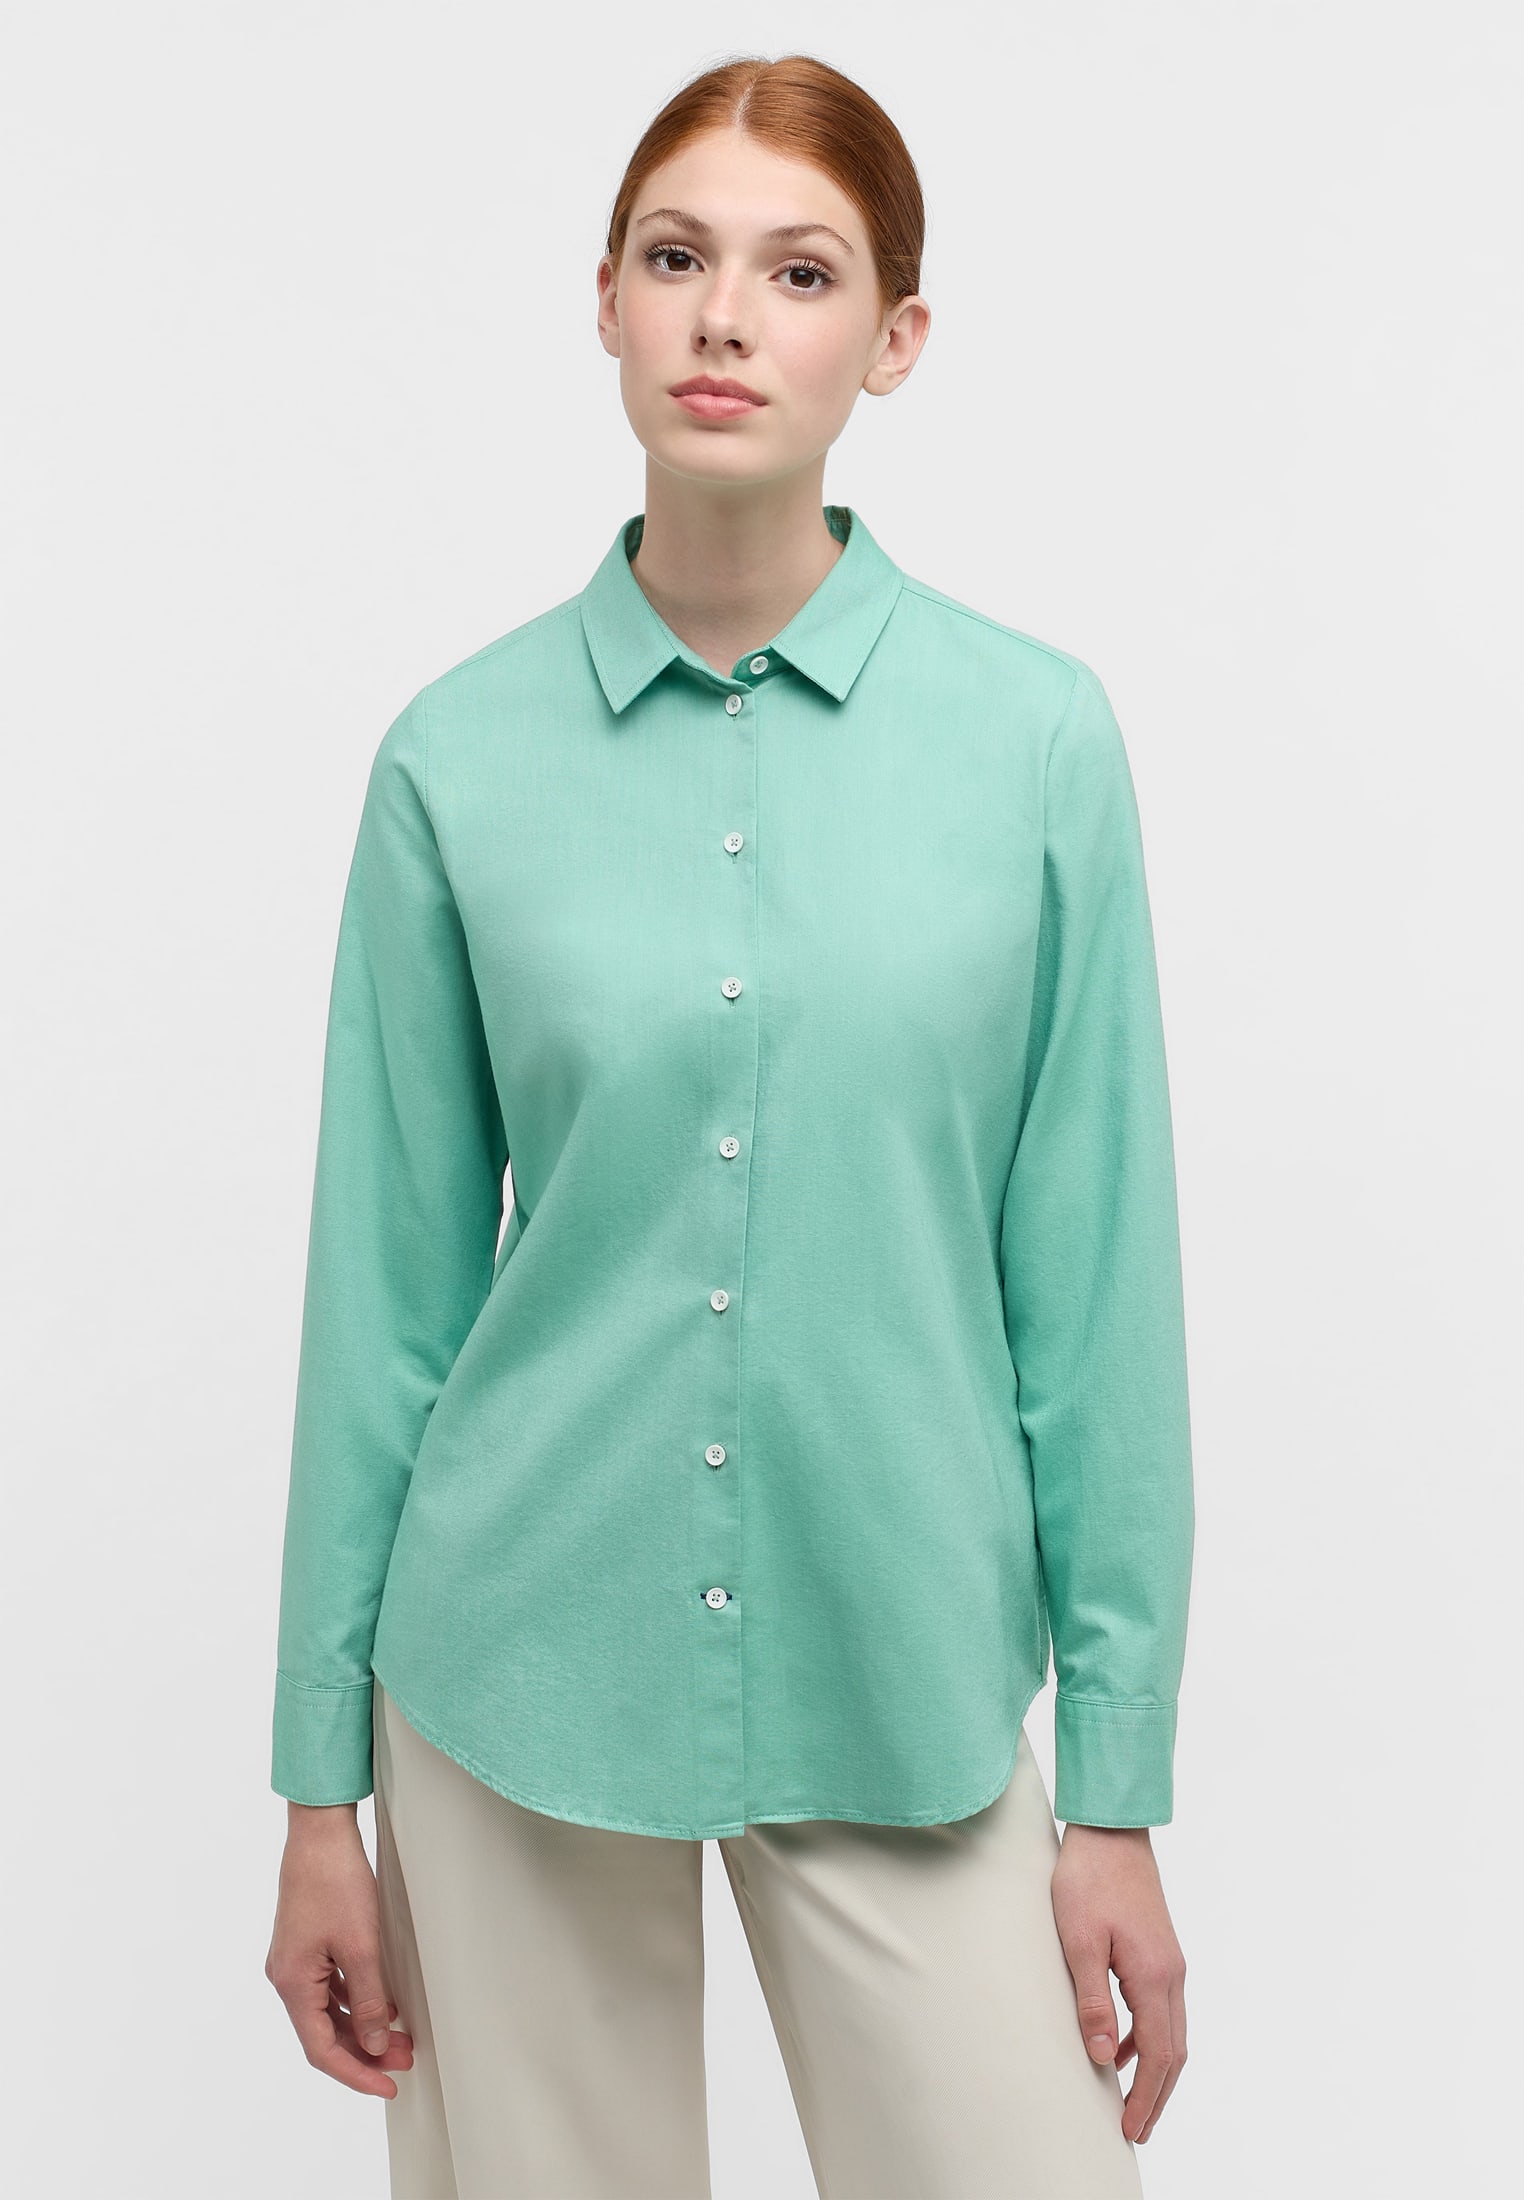 Shirt Bluse 2BL04173-04-02-50-1/1 in Oxford unifarben Langarm | hellgrün | 50 hellgrün | |